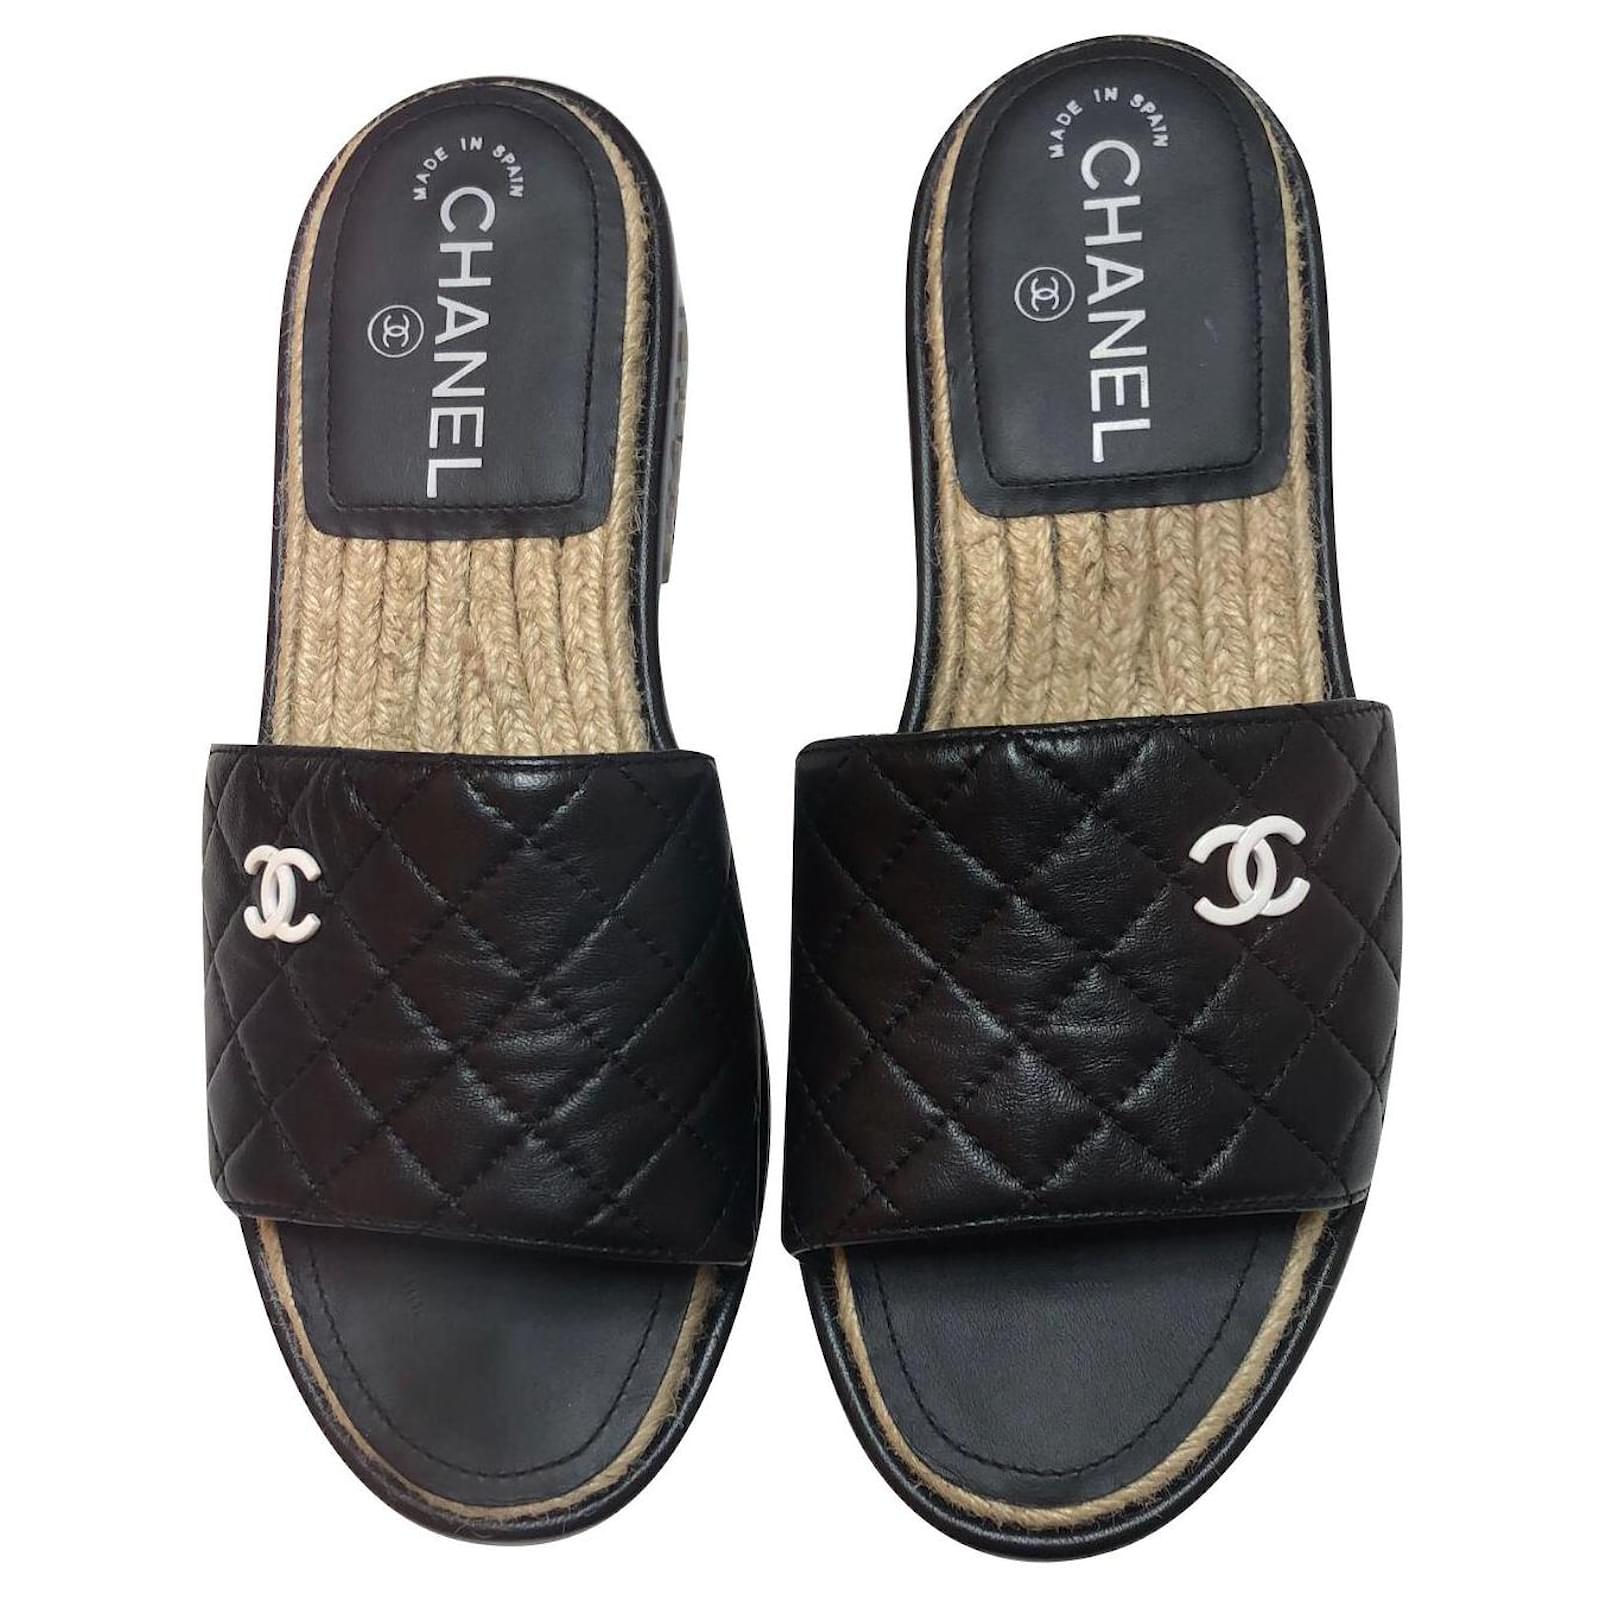 Sandals Chanel Chanel Sandals Size 38 It